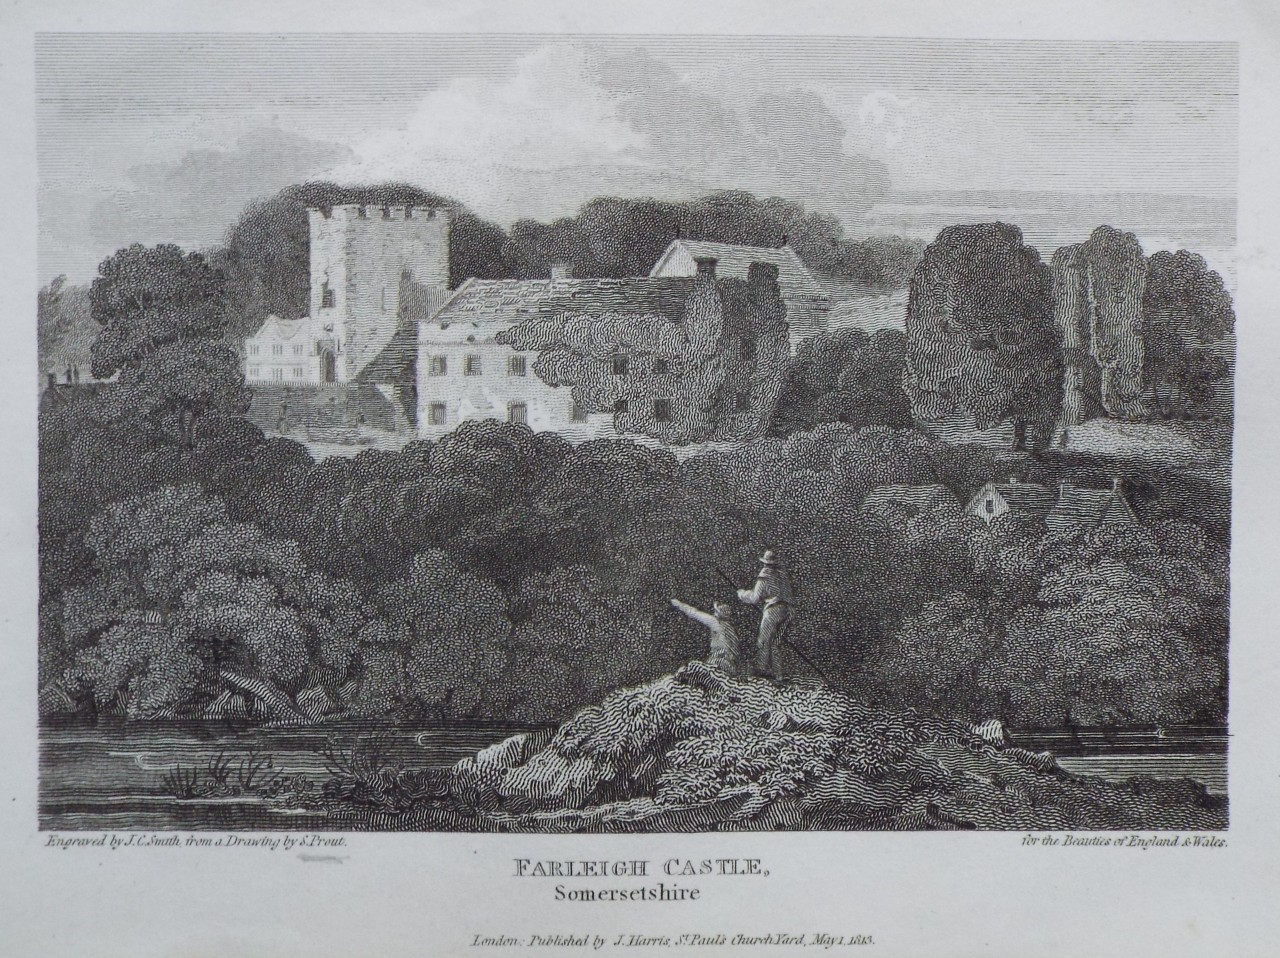 Print - Farleigh Castle, Somersetshire - Smith